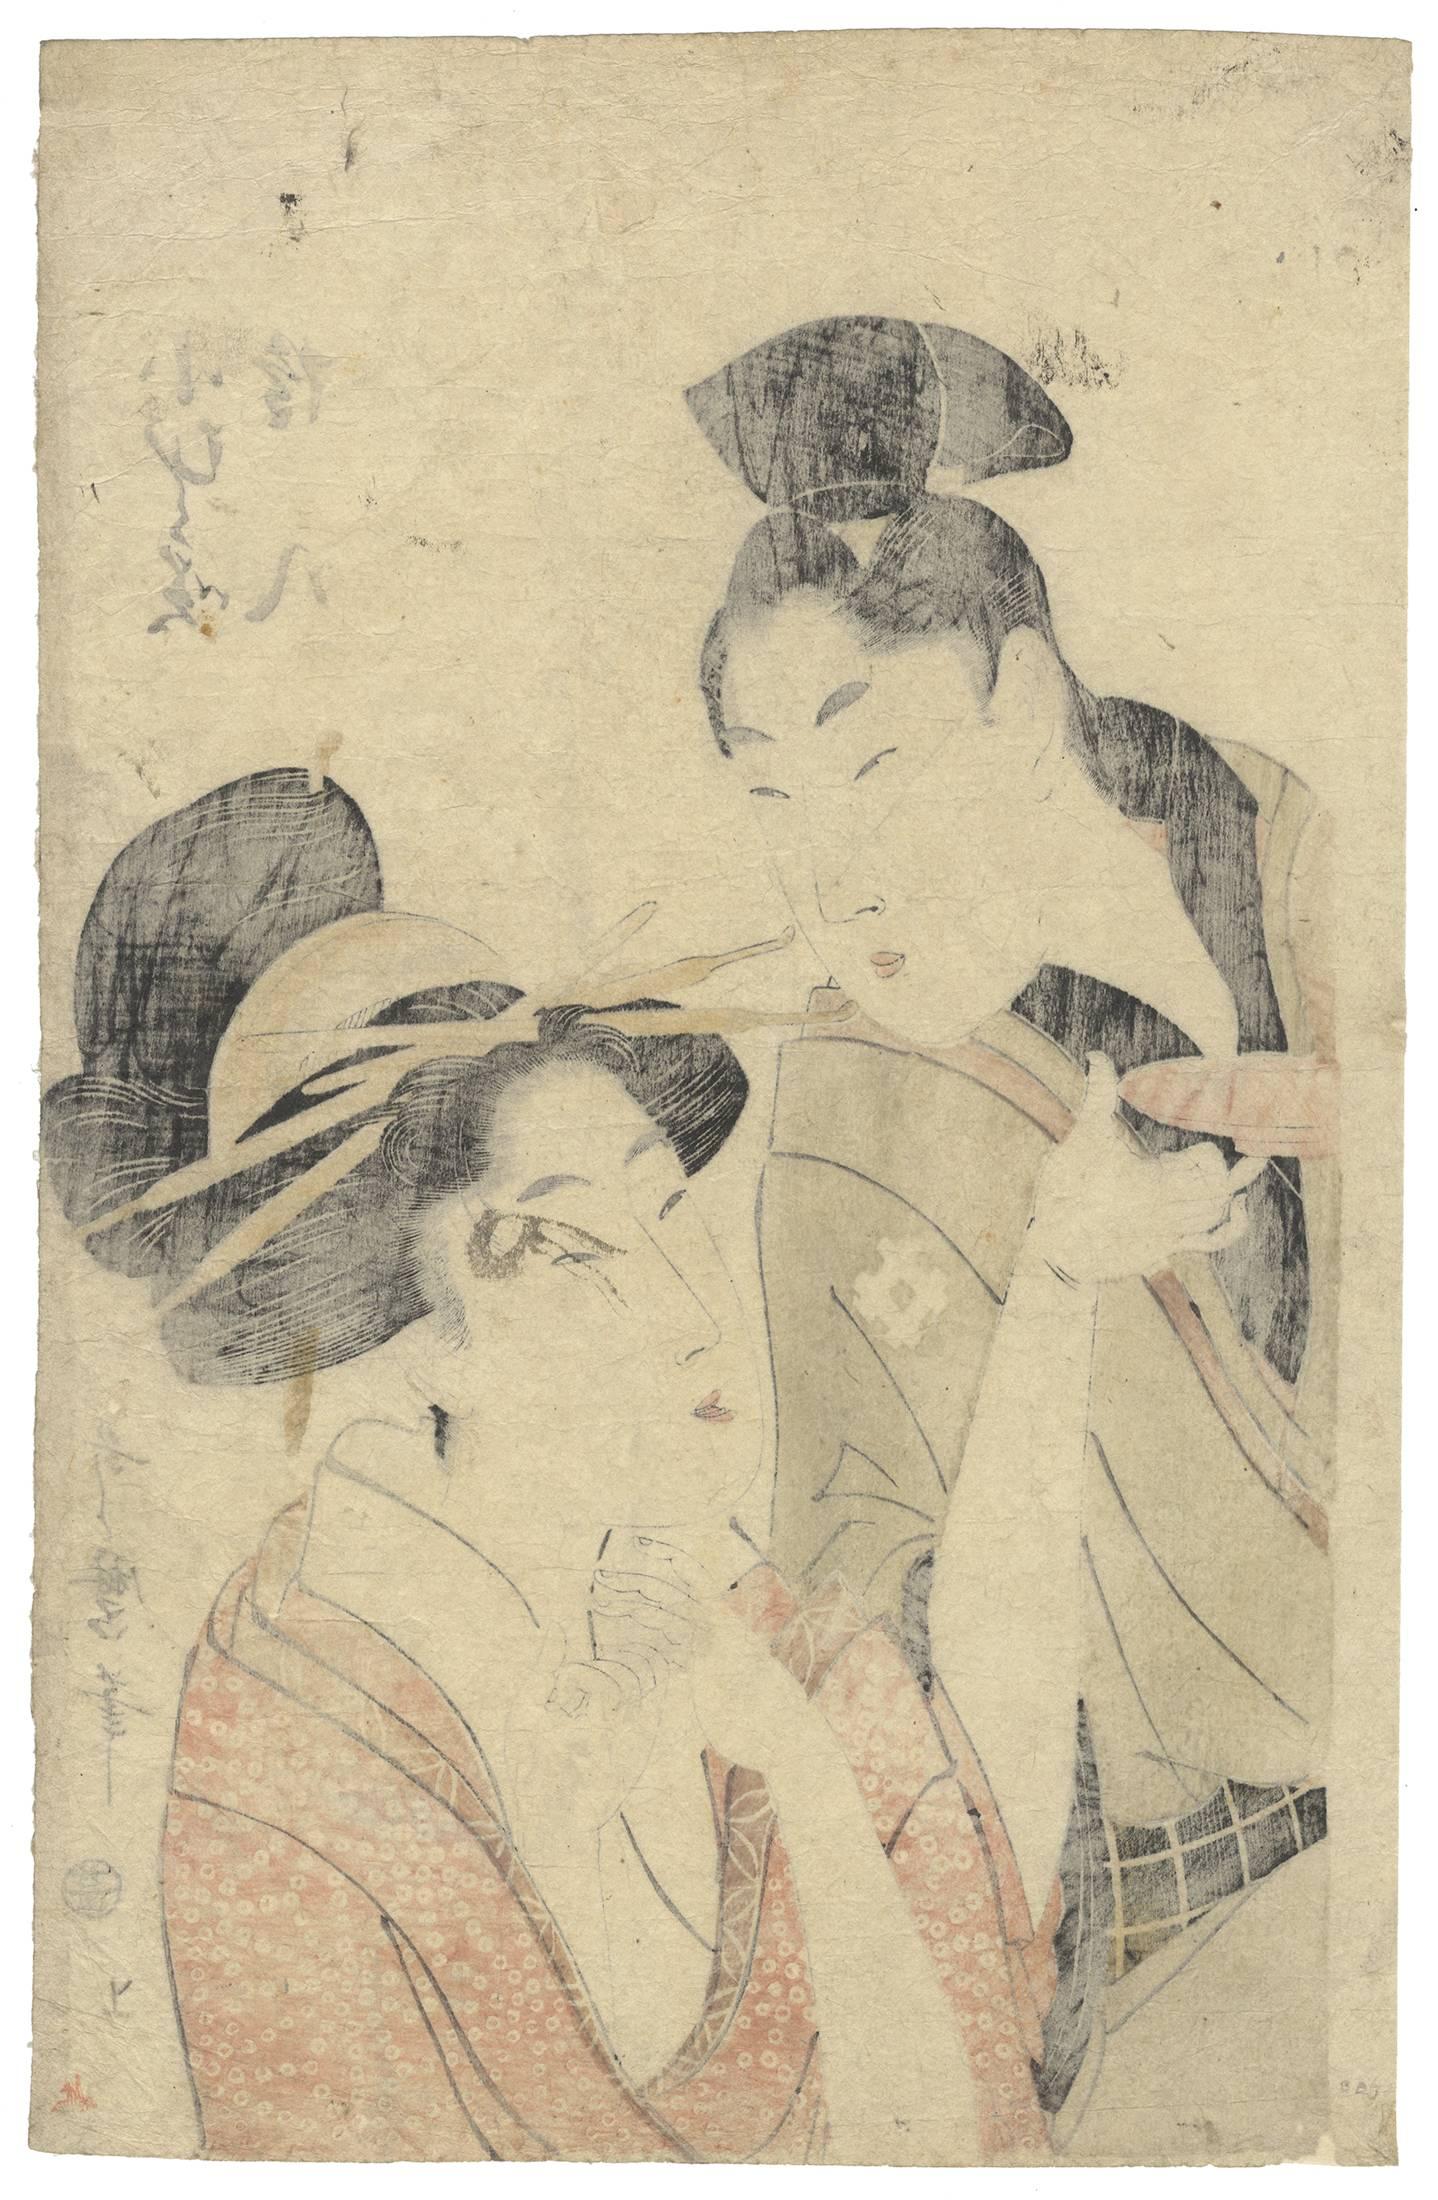 Title: Lovers Komurasaki And Gonpachi
Artist: Utamaro I Kitagawa. Signed as Utamaro Hitsu. (1753 - 1806)
Publisher: Maruya Jinpachi
Published in late 18th Century.

This print depicts the lovers Komurasaki and Gonpachi. They seem to be conversing,